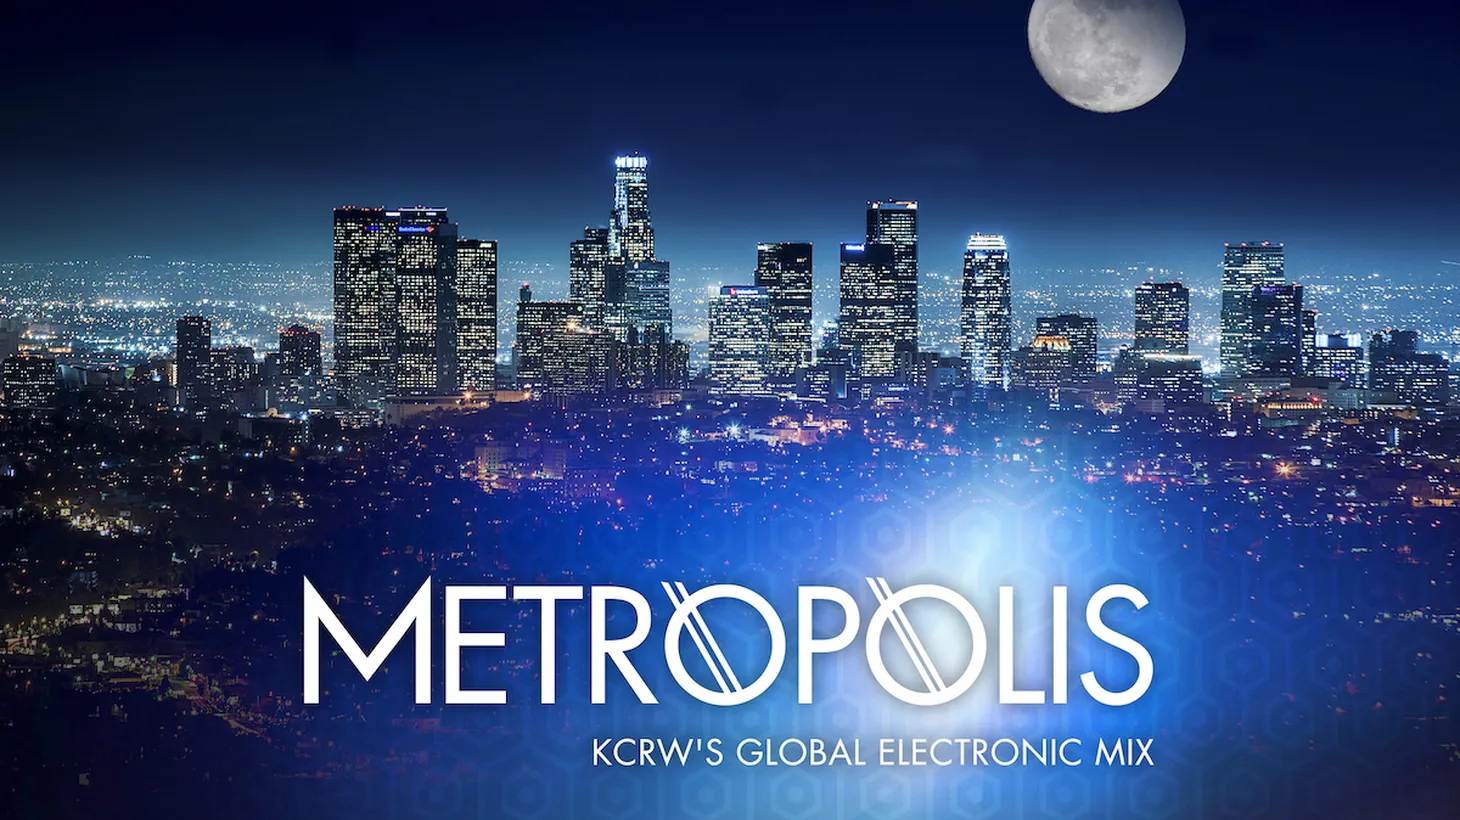 Metropolis playlist, March 19, 2022.